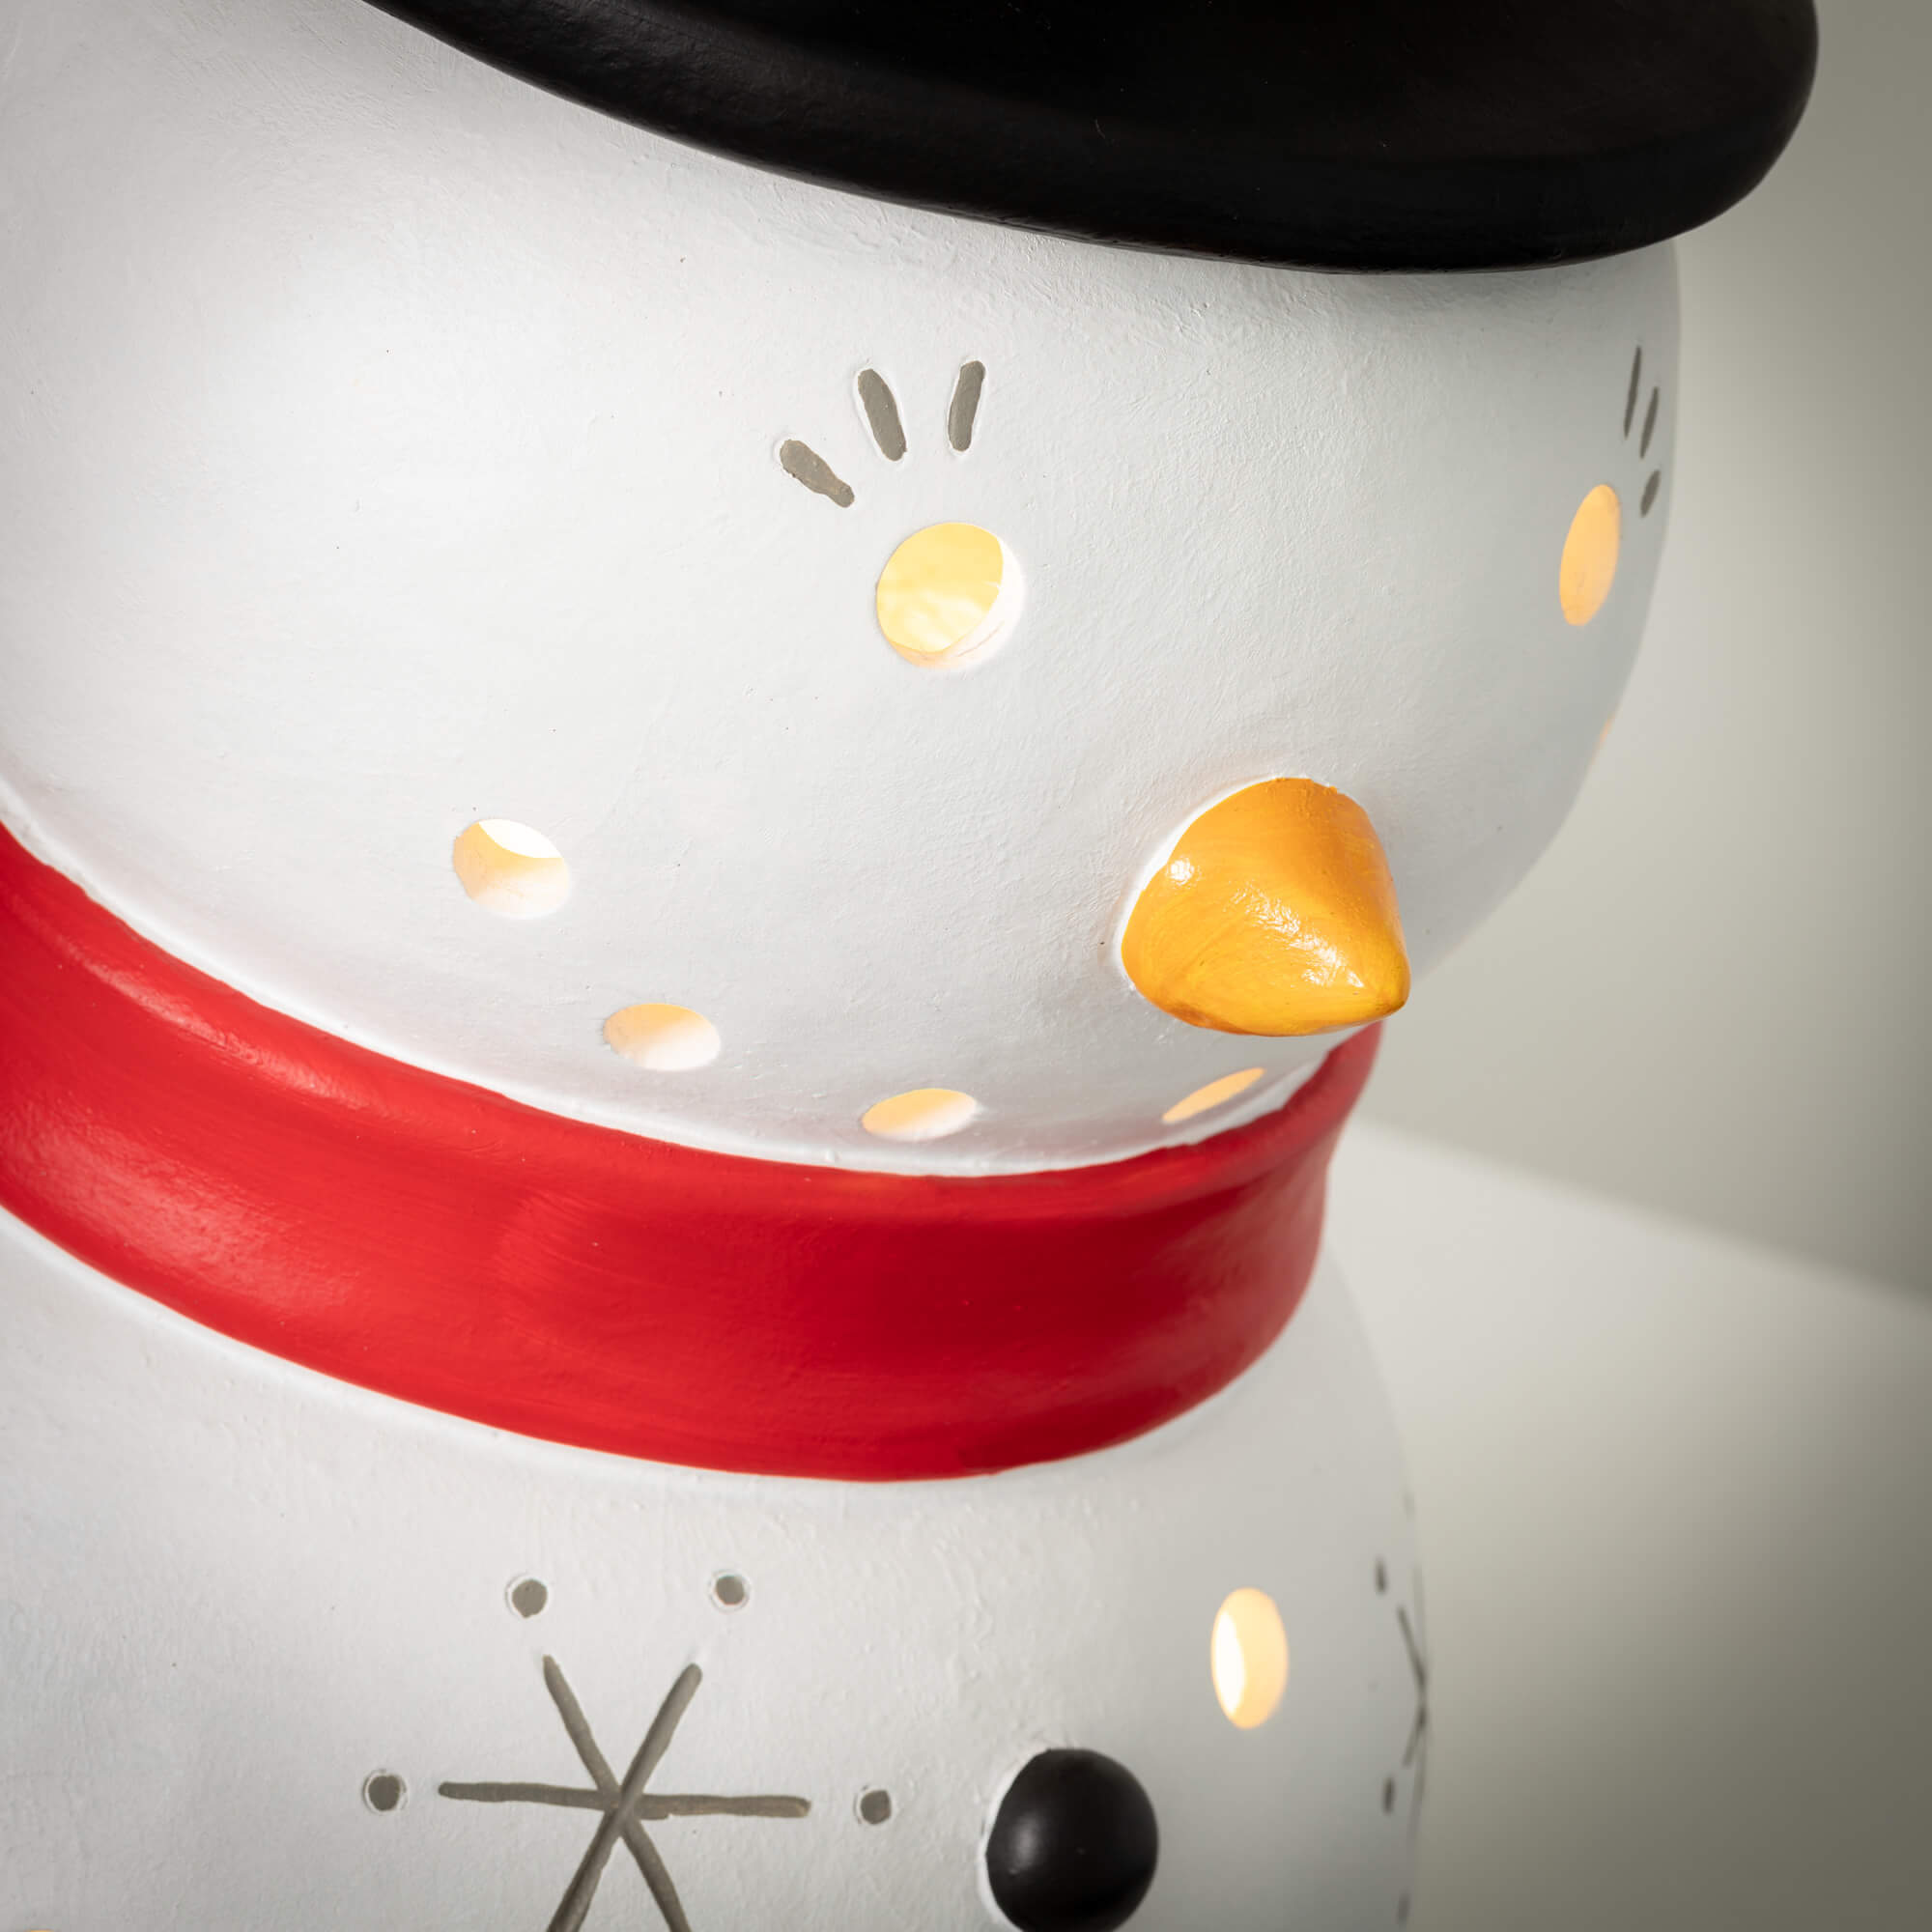 Outdoor Lighted Snowman Figure – Sullivans Home Decor